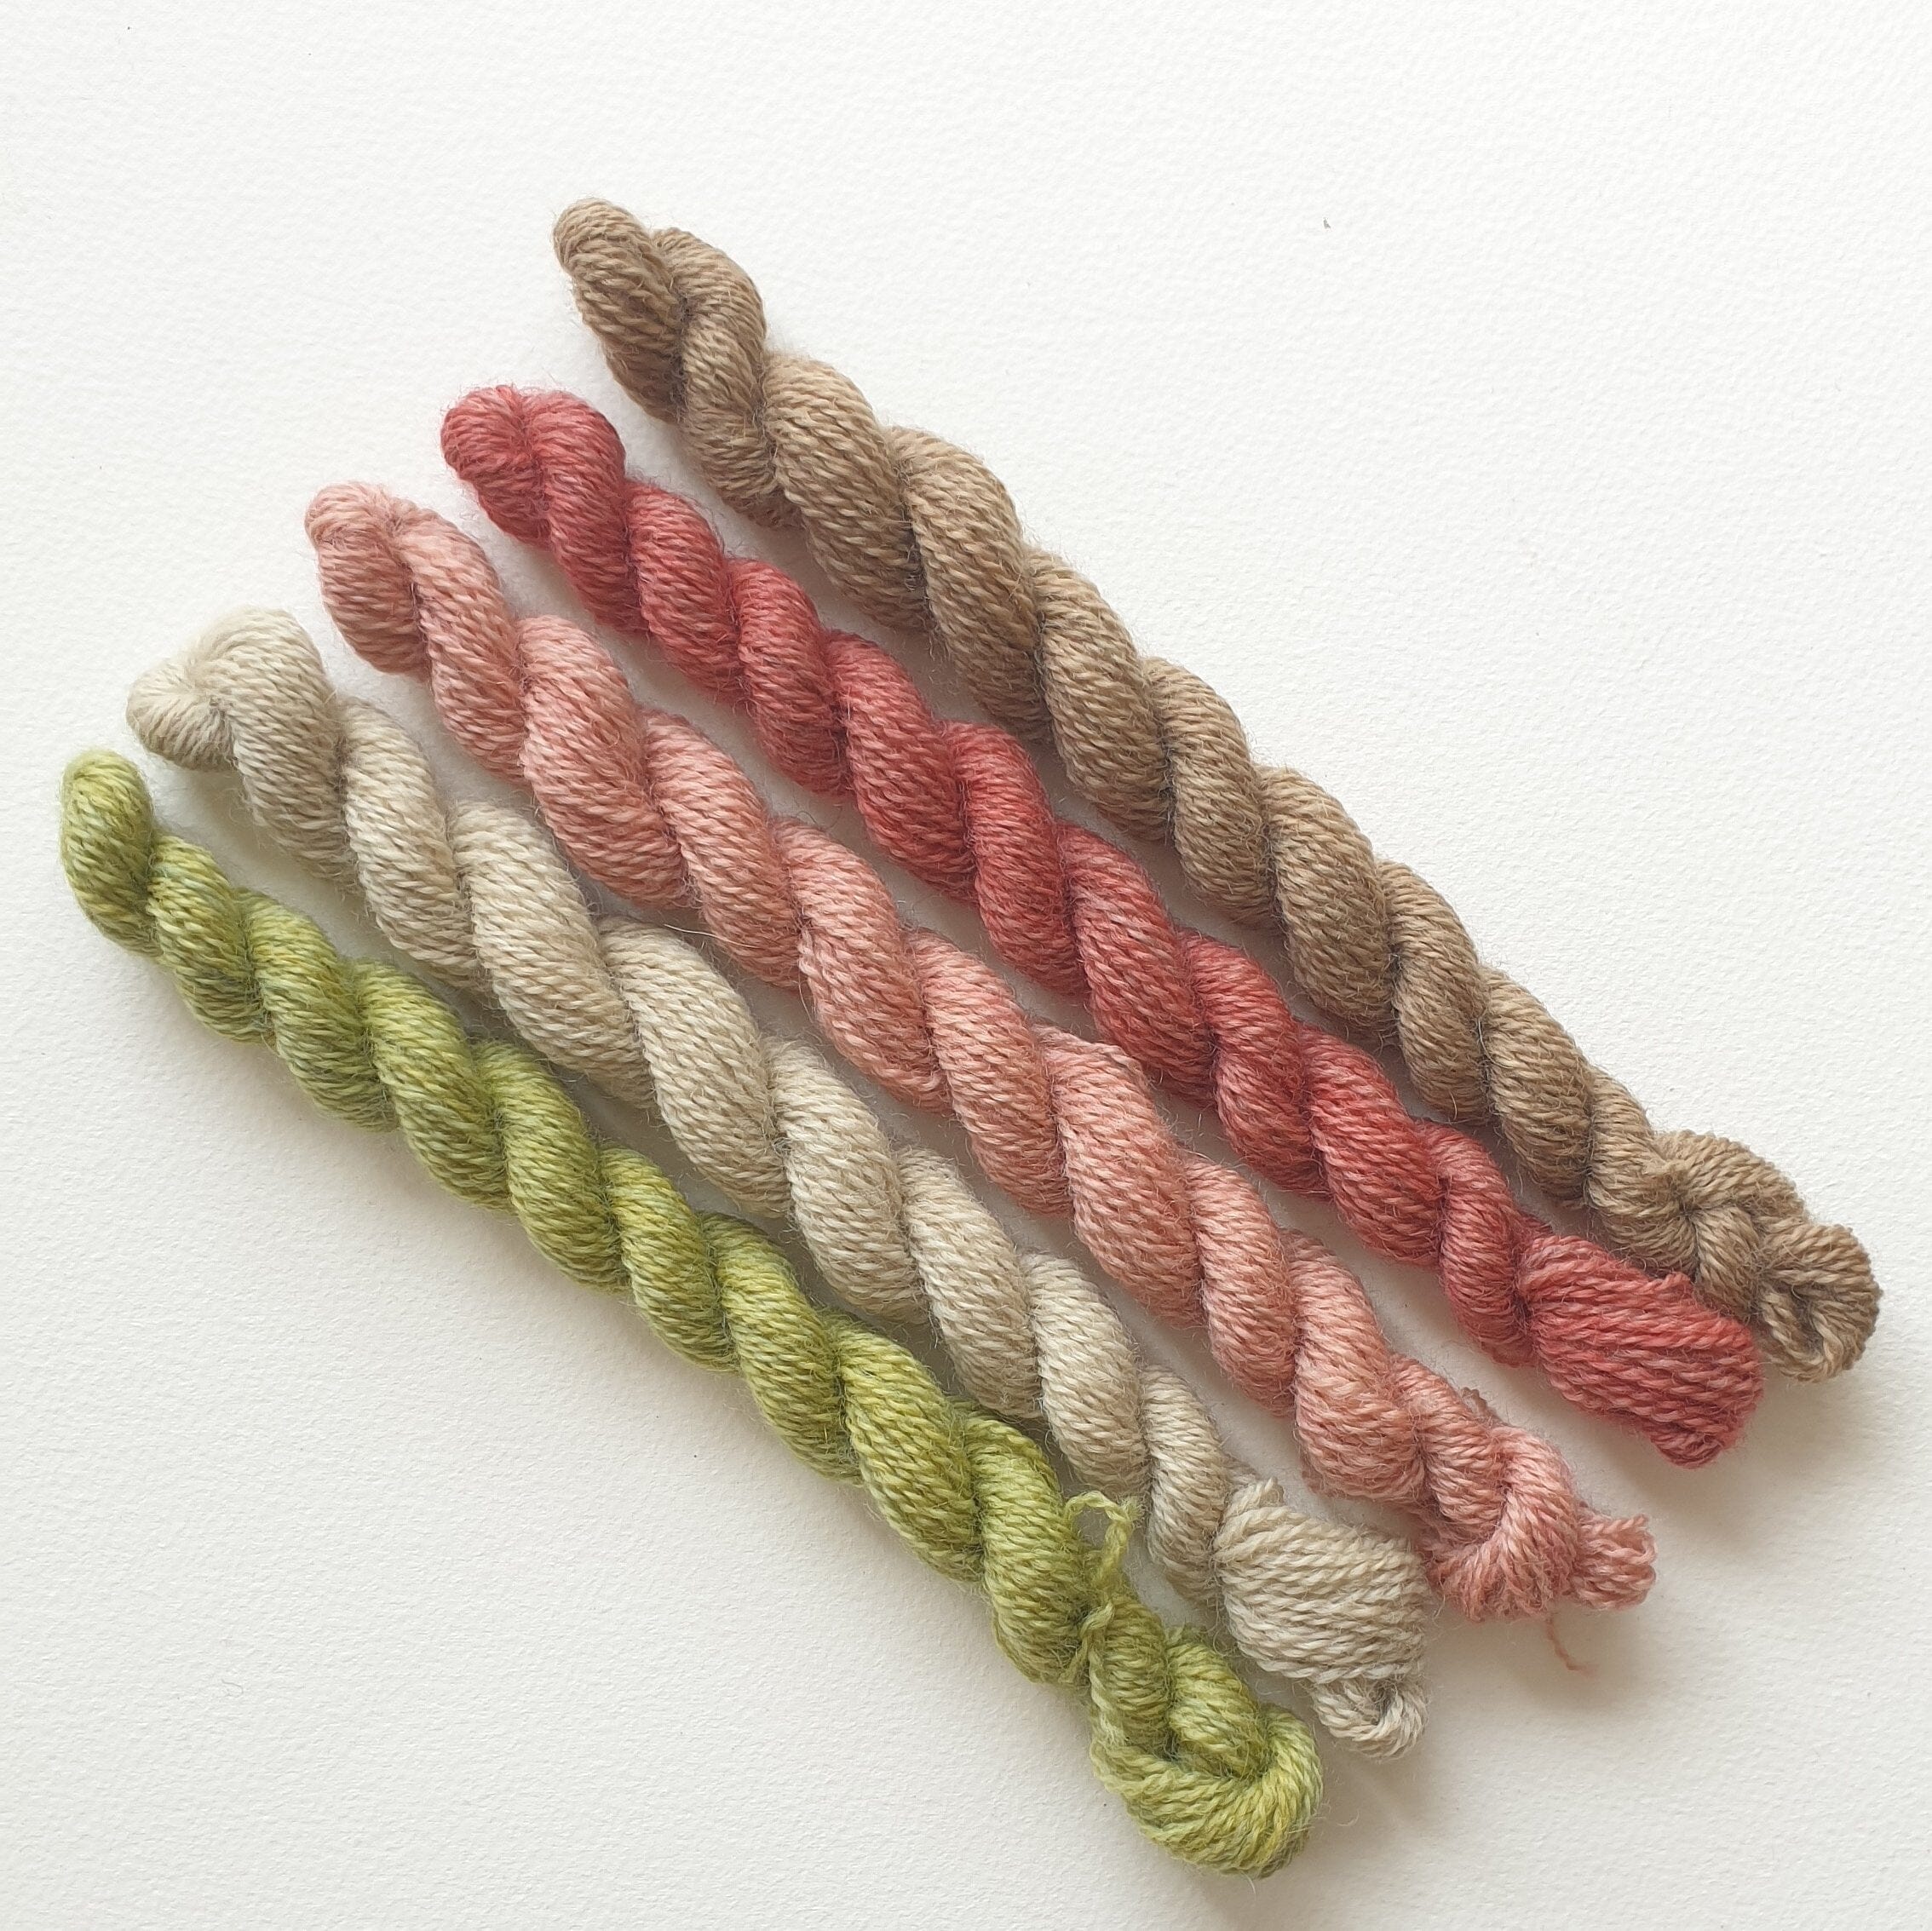 Finn Wool Embroidery Thread Set - Valleymaker Weaving Kits Valleymaker Rose Garden 